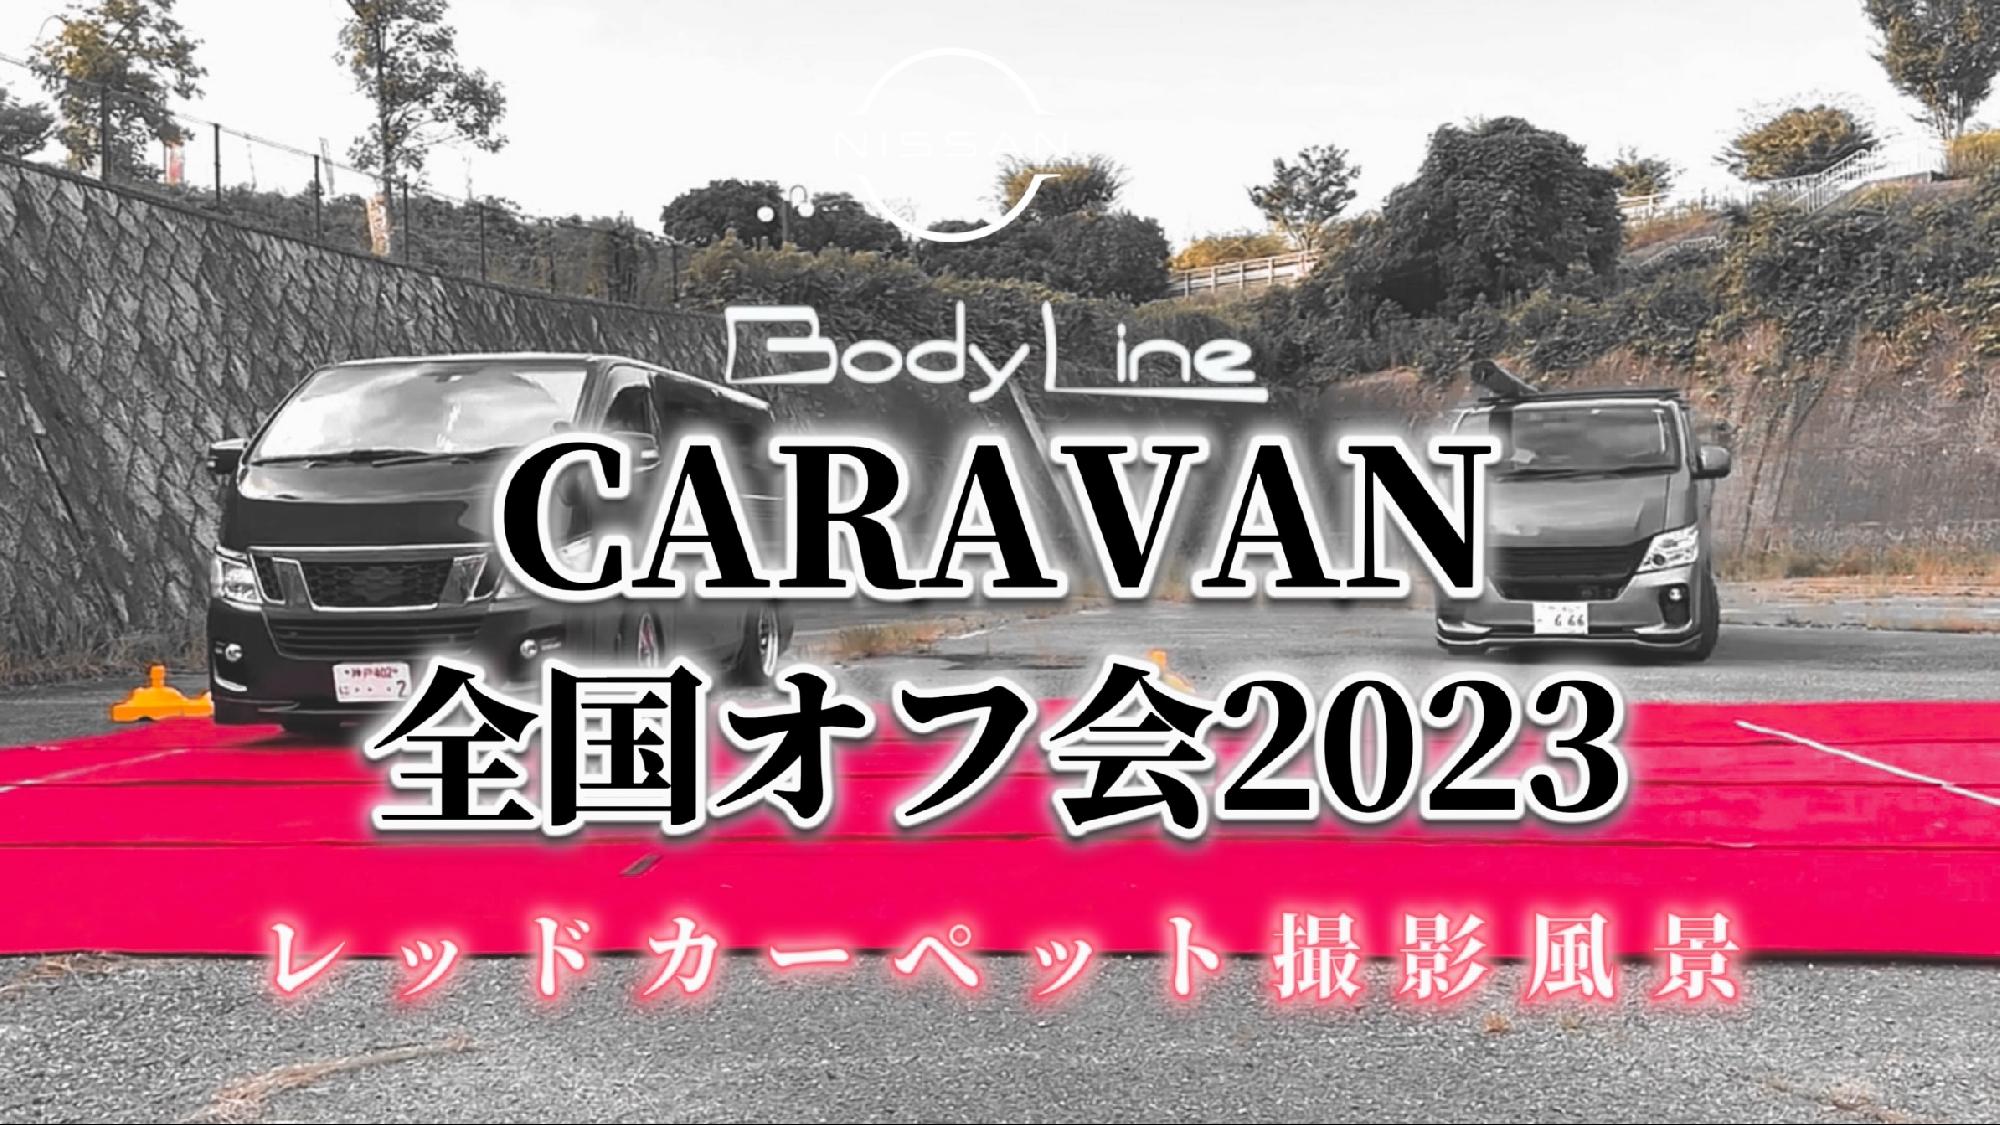  【Body Line】CARAVAN全国オフ会2023〜レッドカーペット撮影風景〜